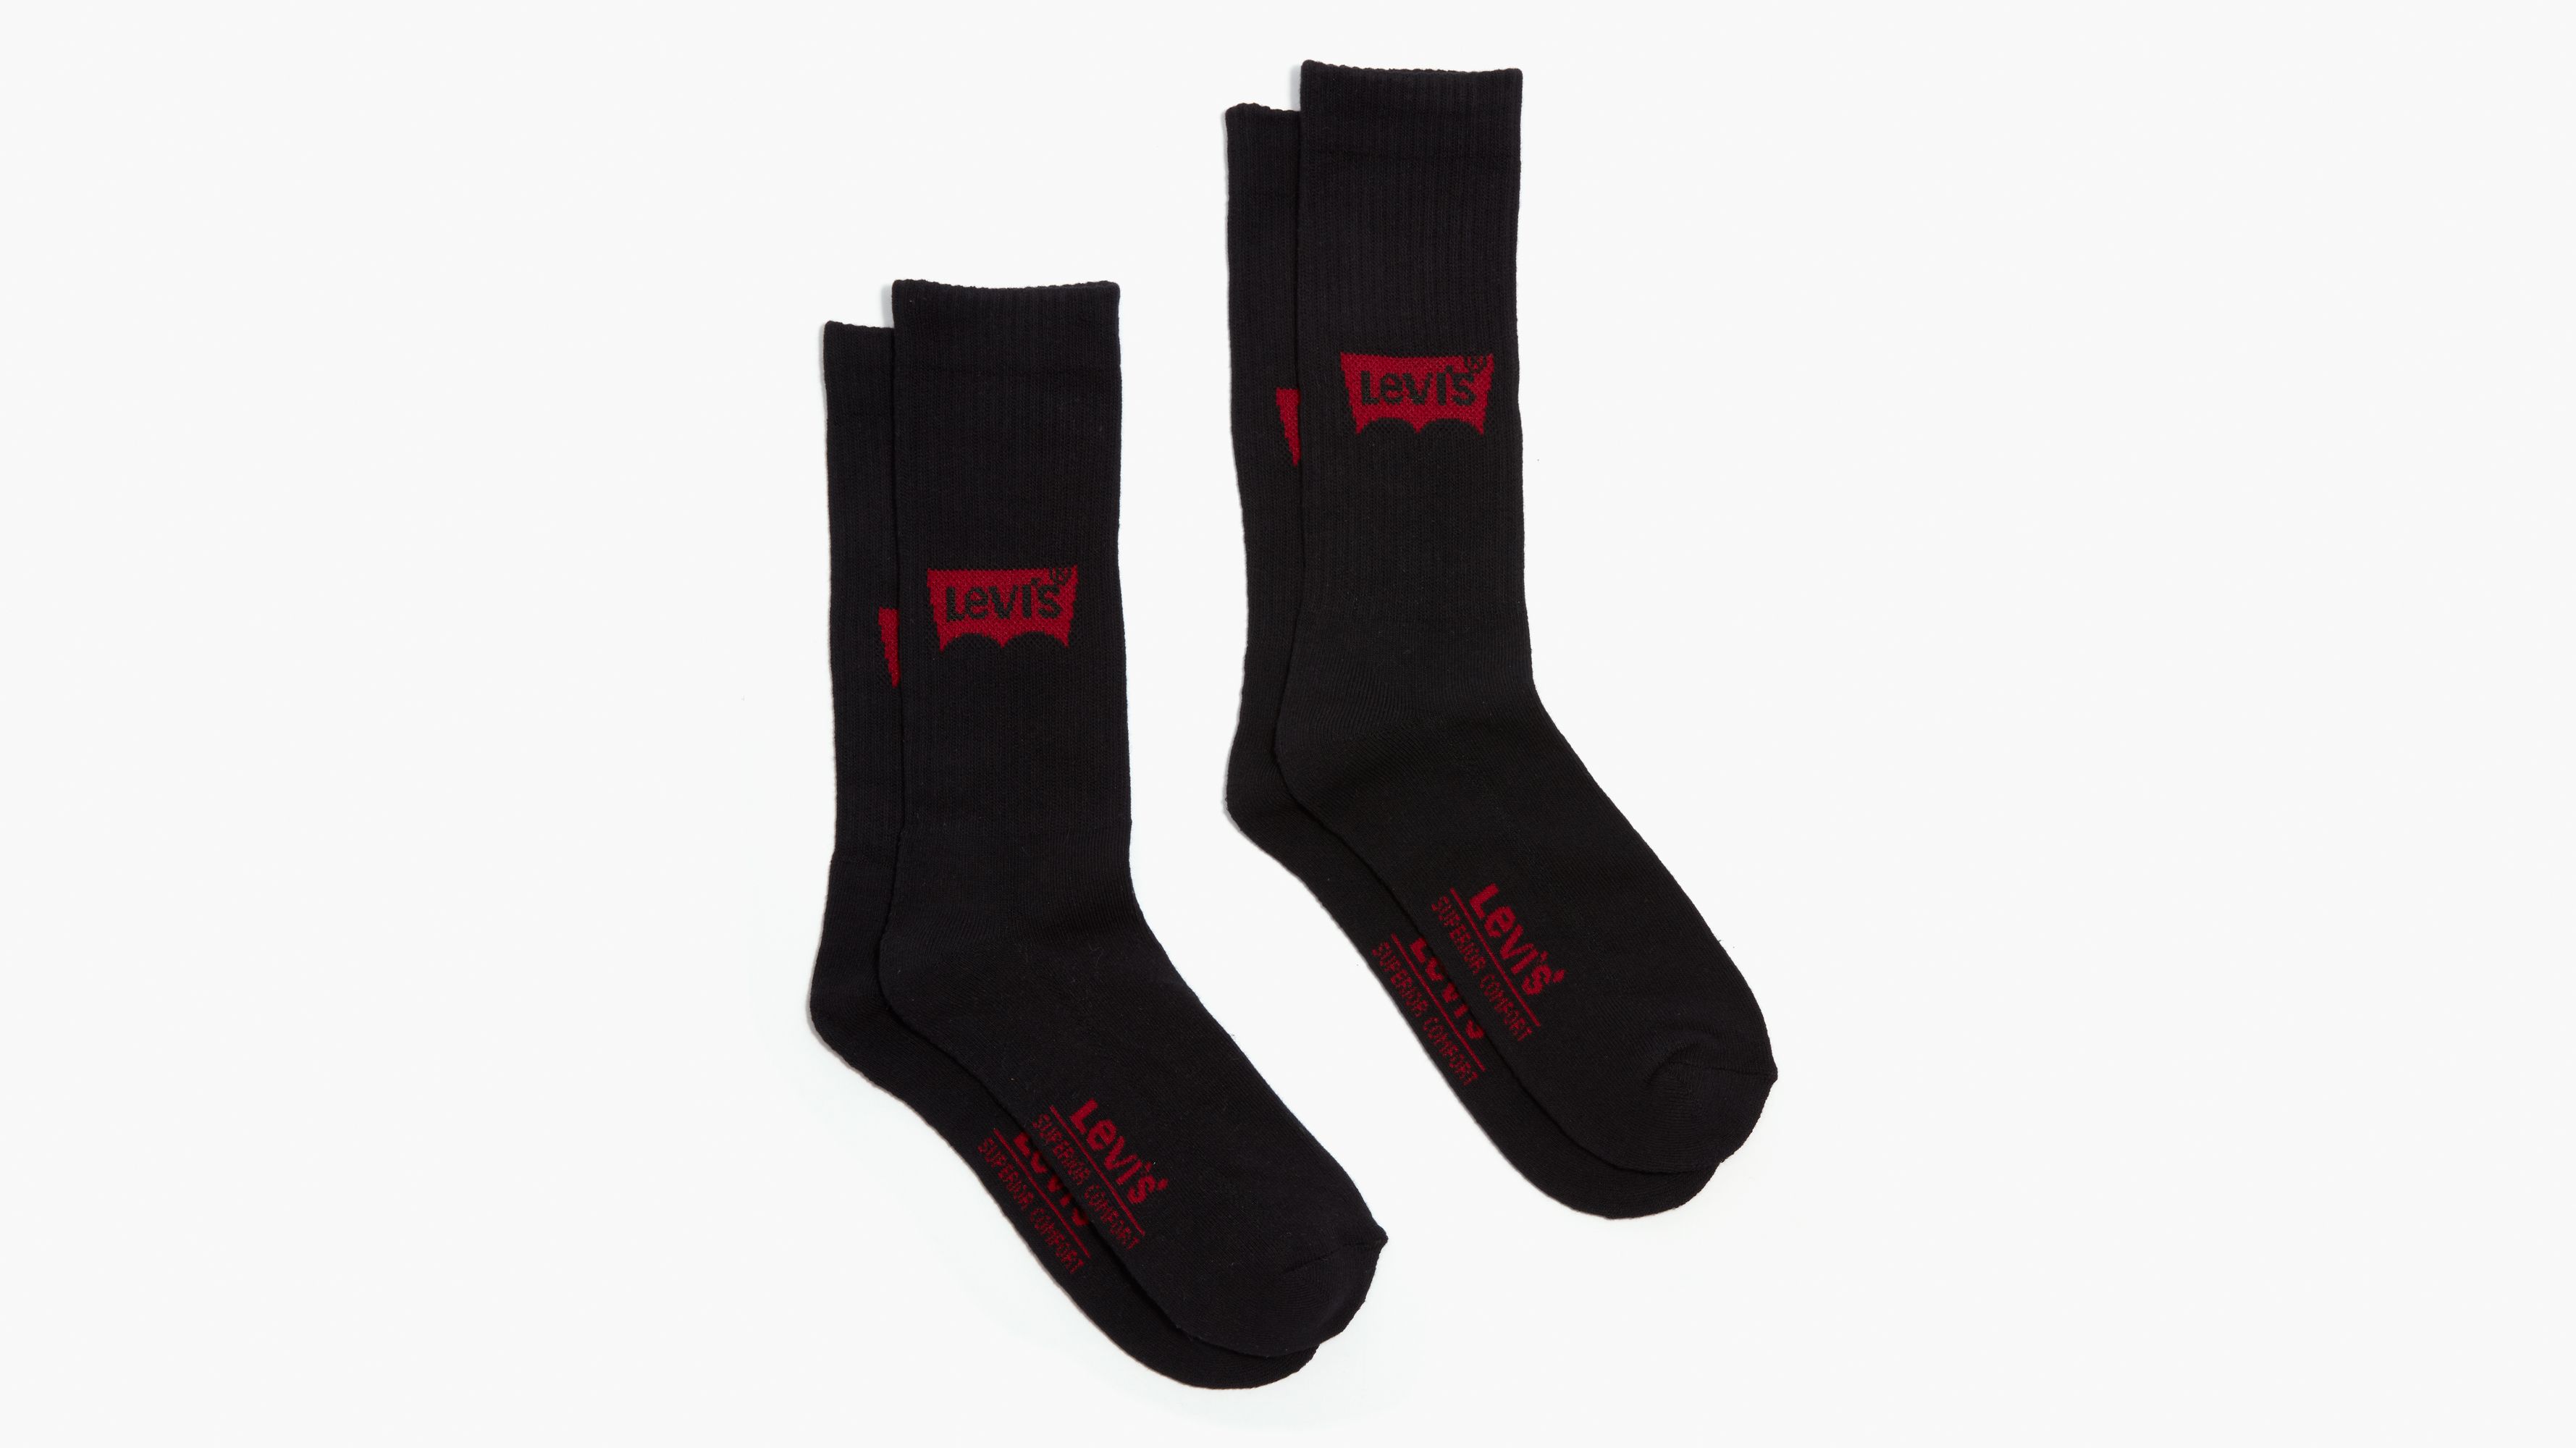 levis socks